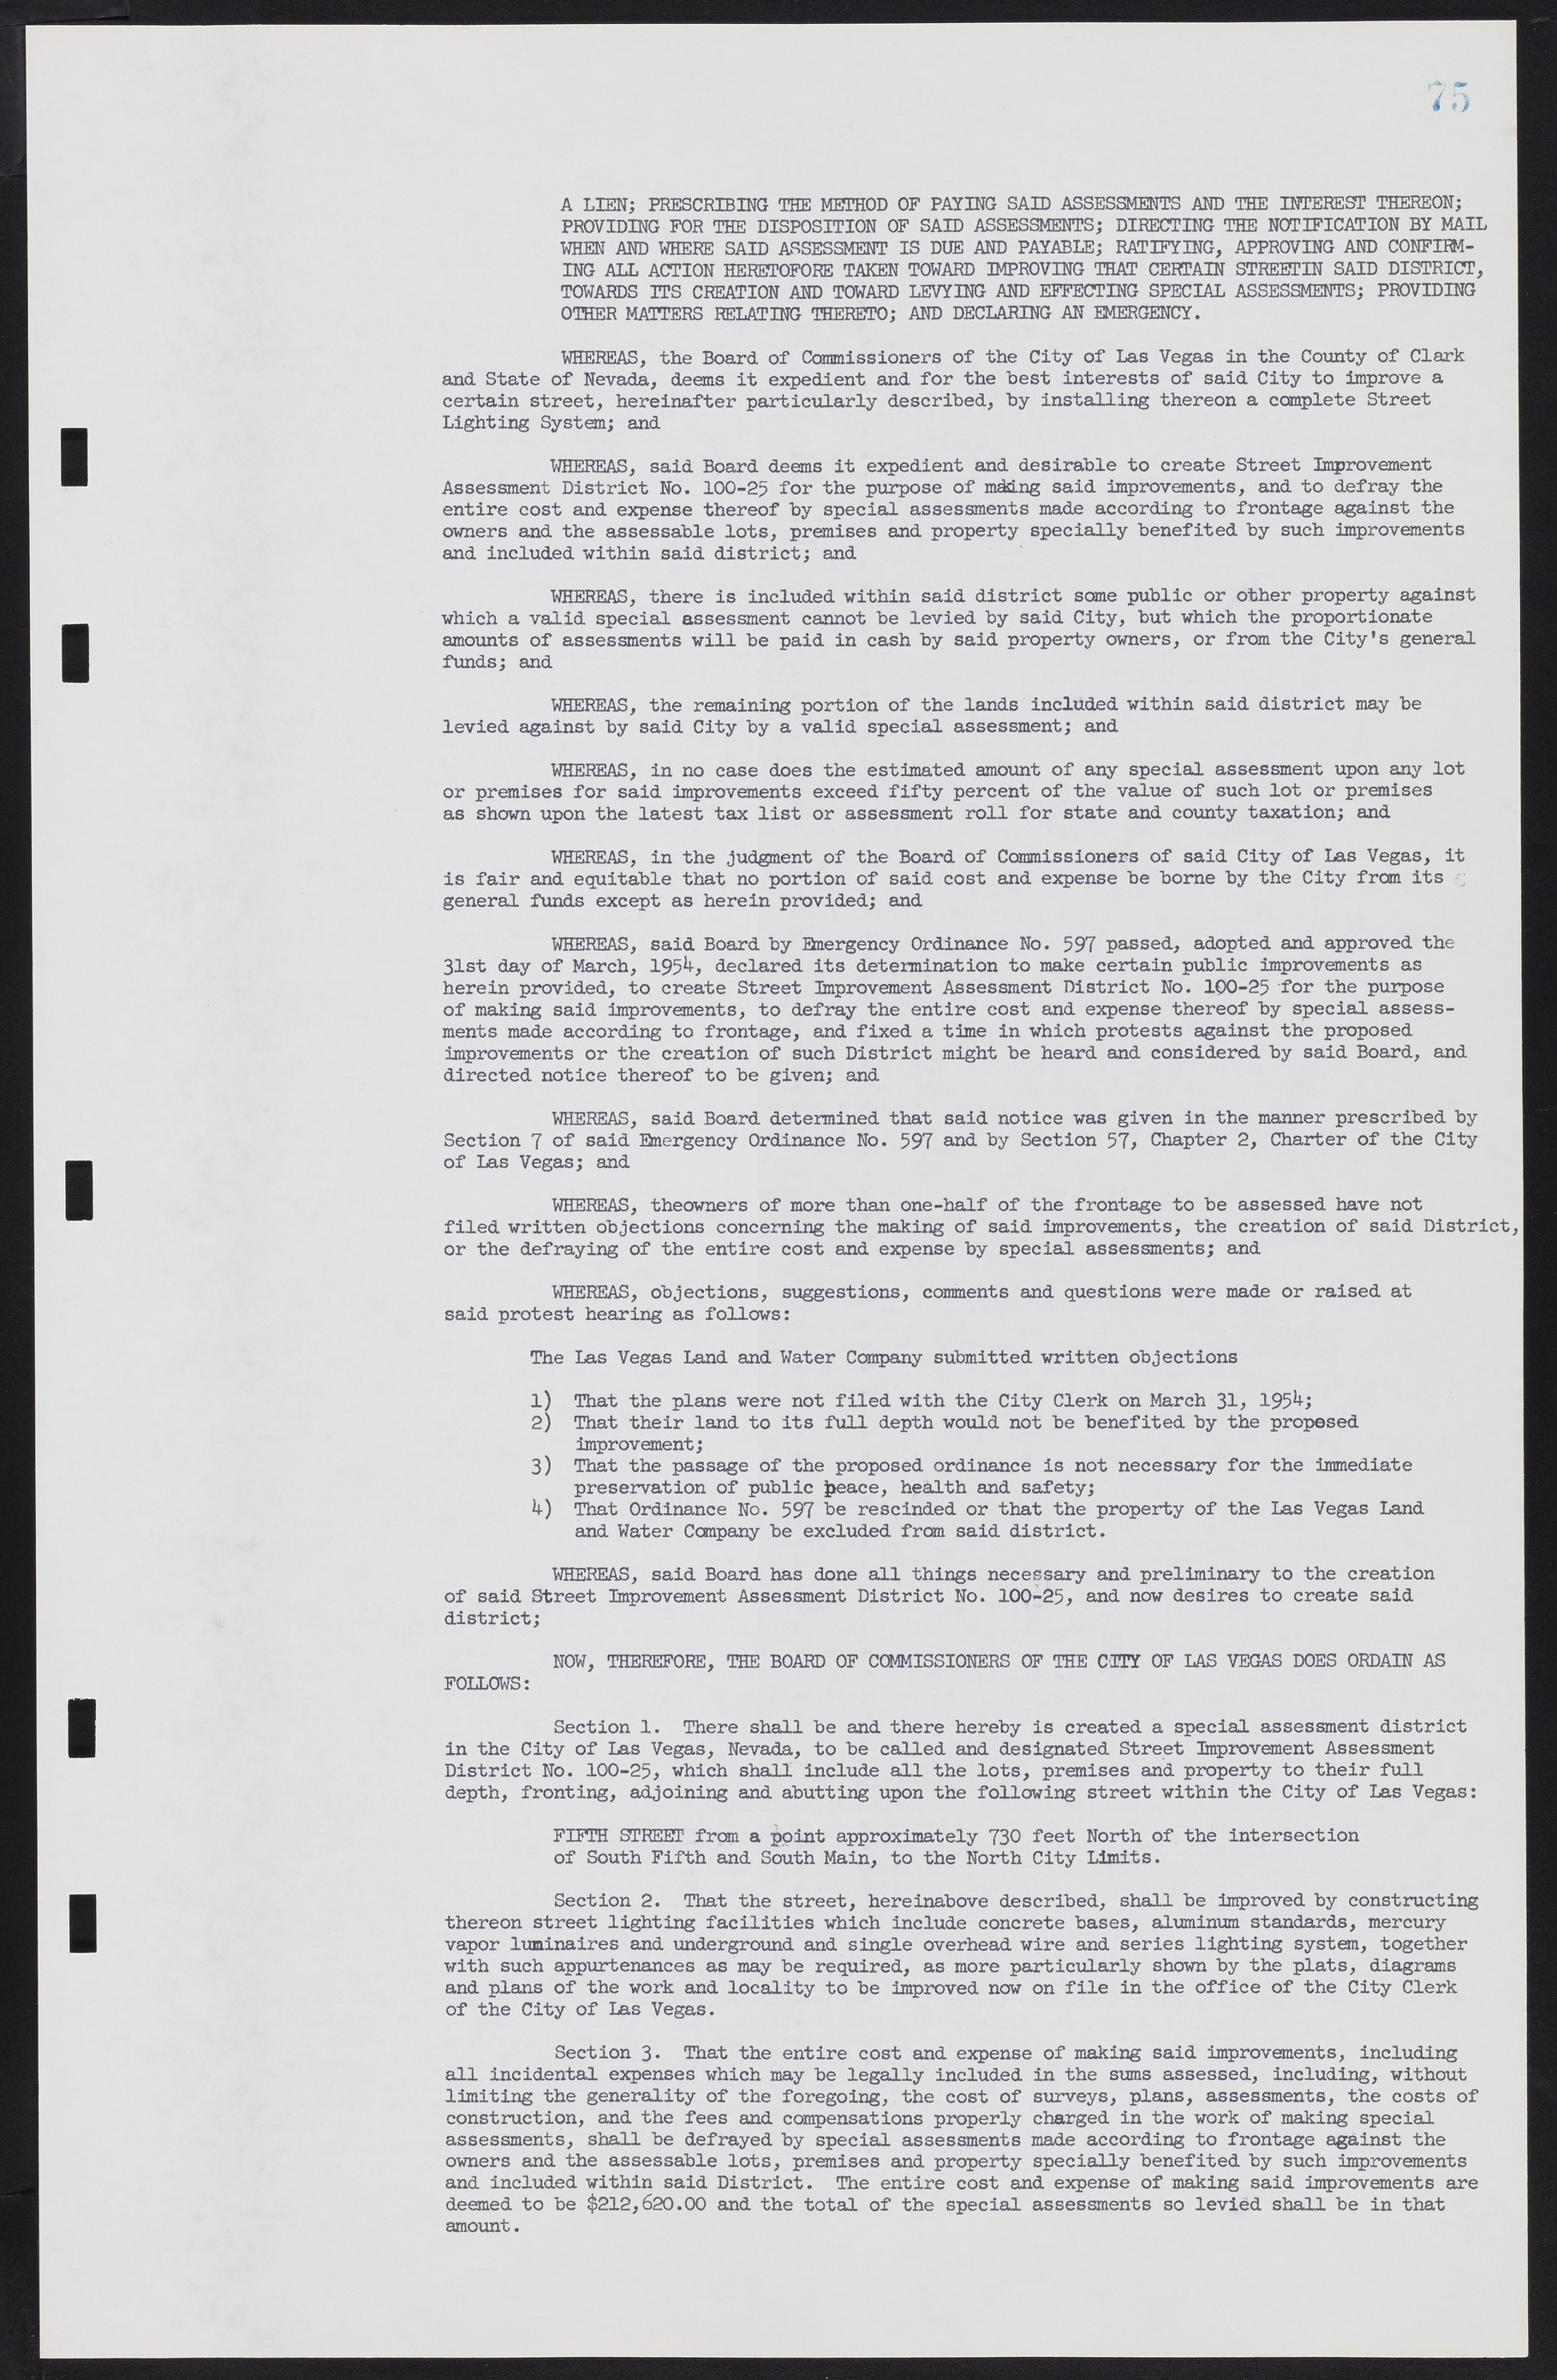 Las Vegas City Commission Minutes, February 17, 1954 to September 21, 1955, lvc000009-79